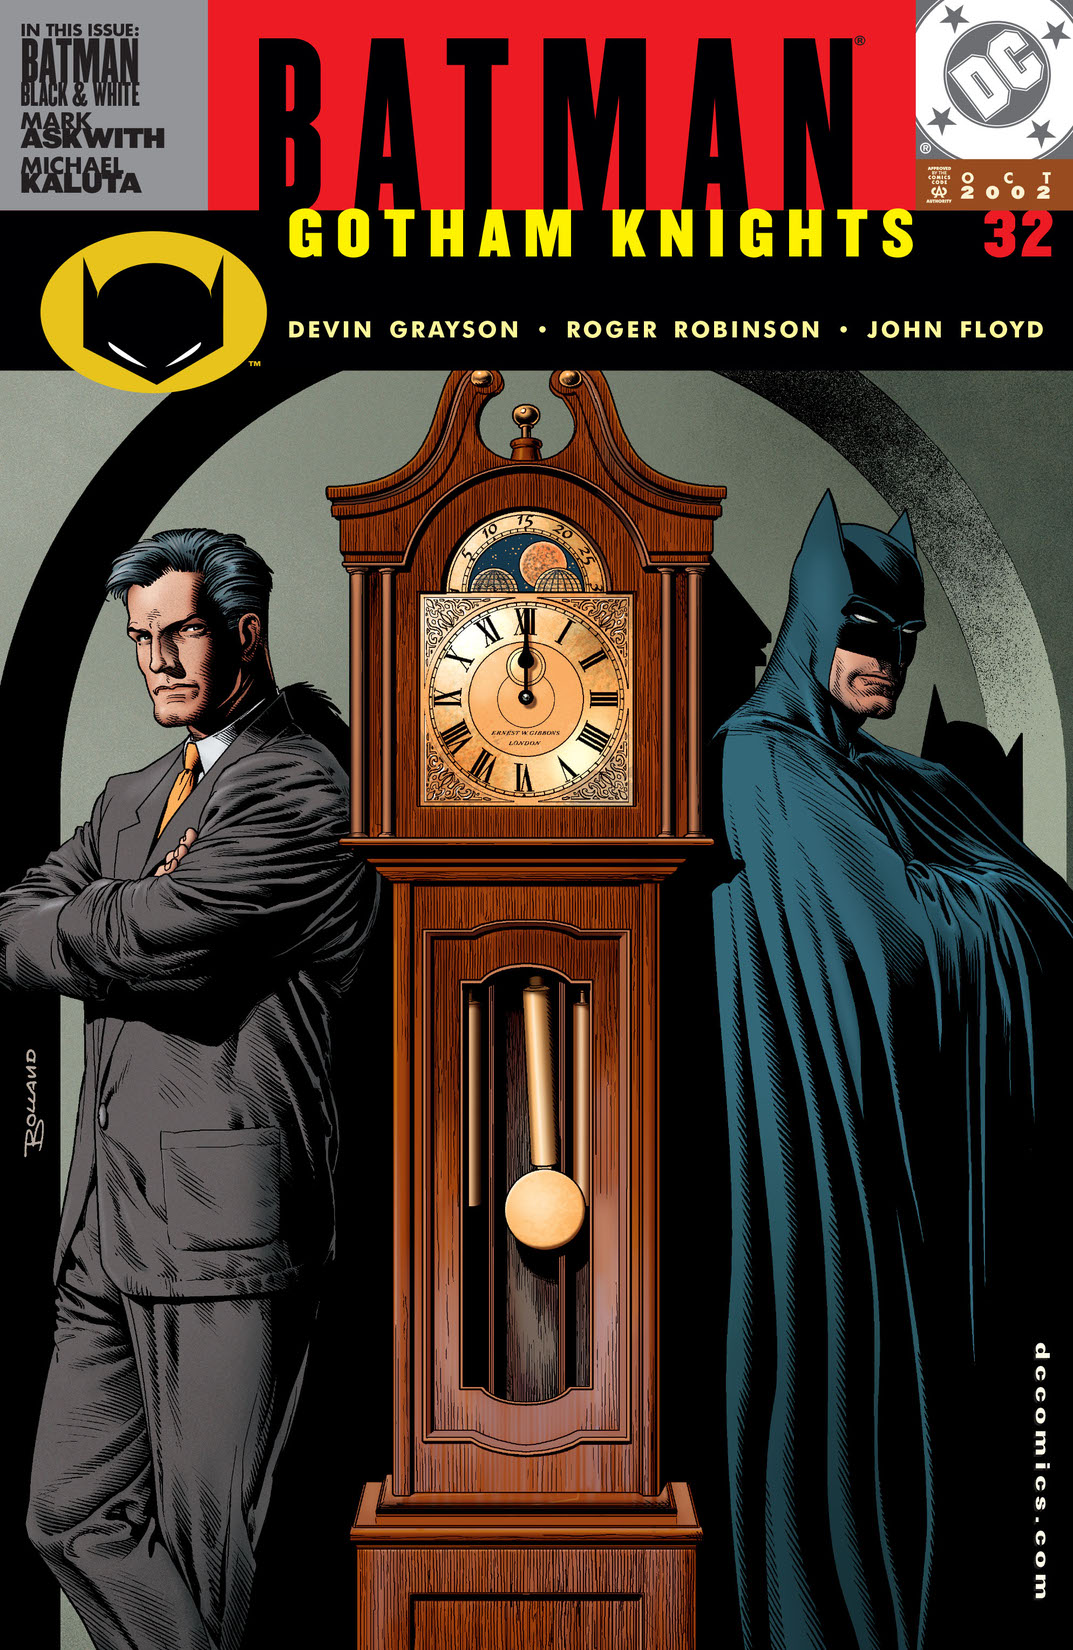 Batman: Gotham Knights #32 preview images